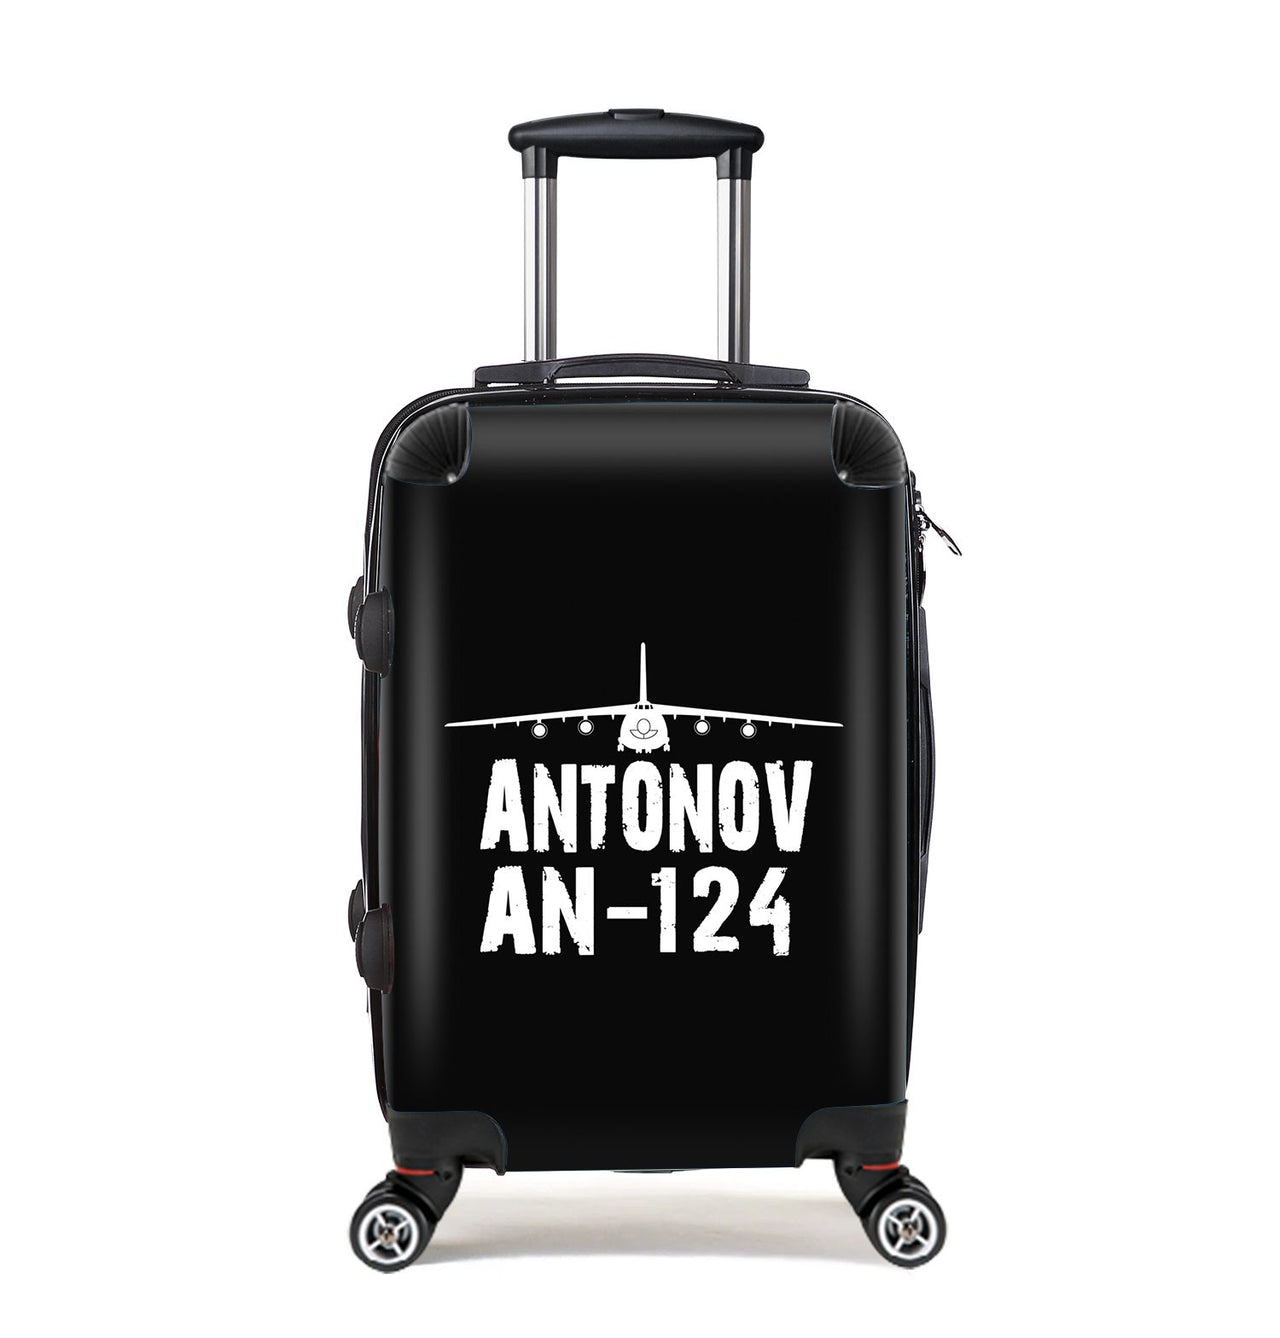 Antonov AN-124 & Plane Designed Cabin Size Luggages